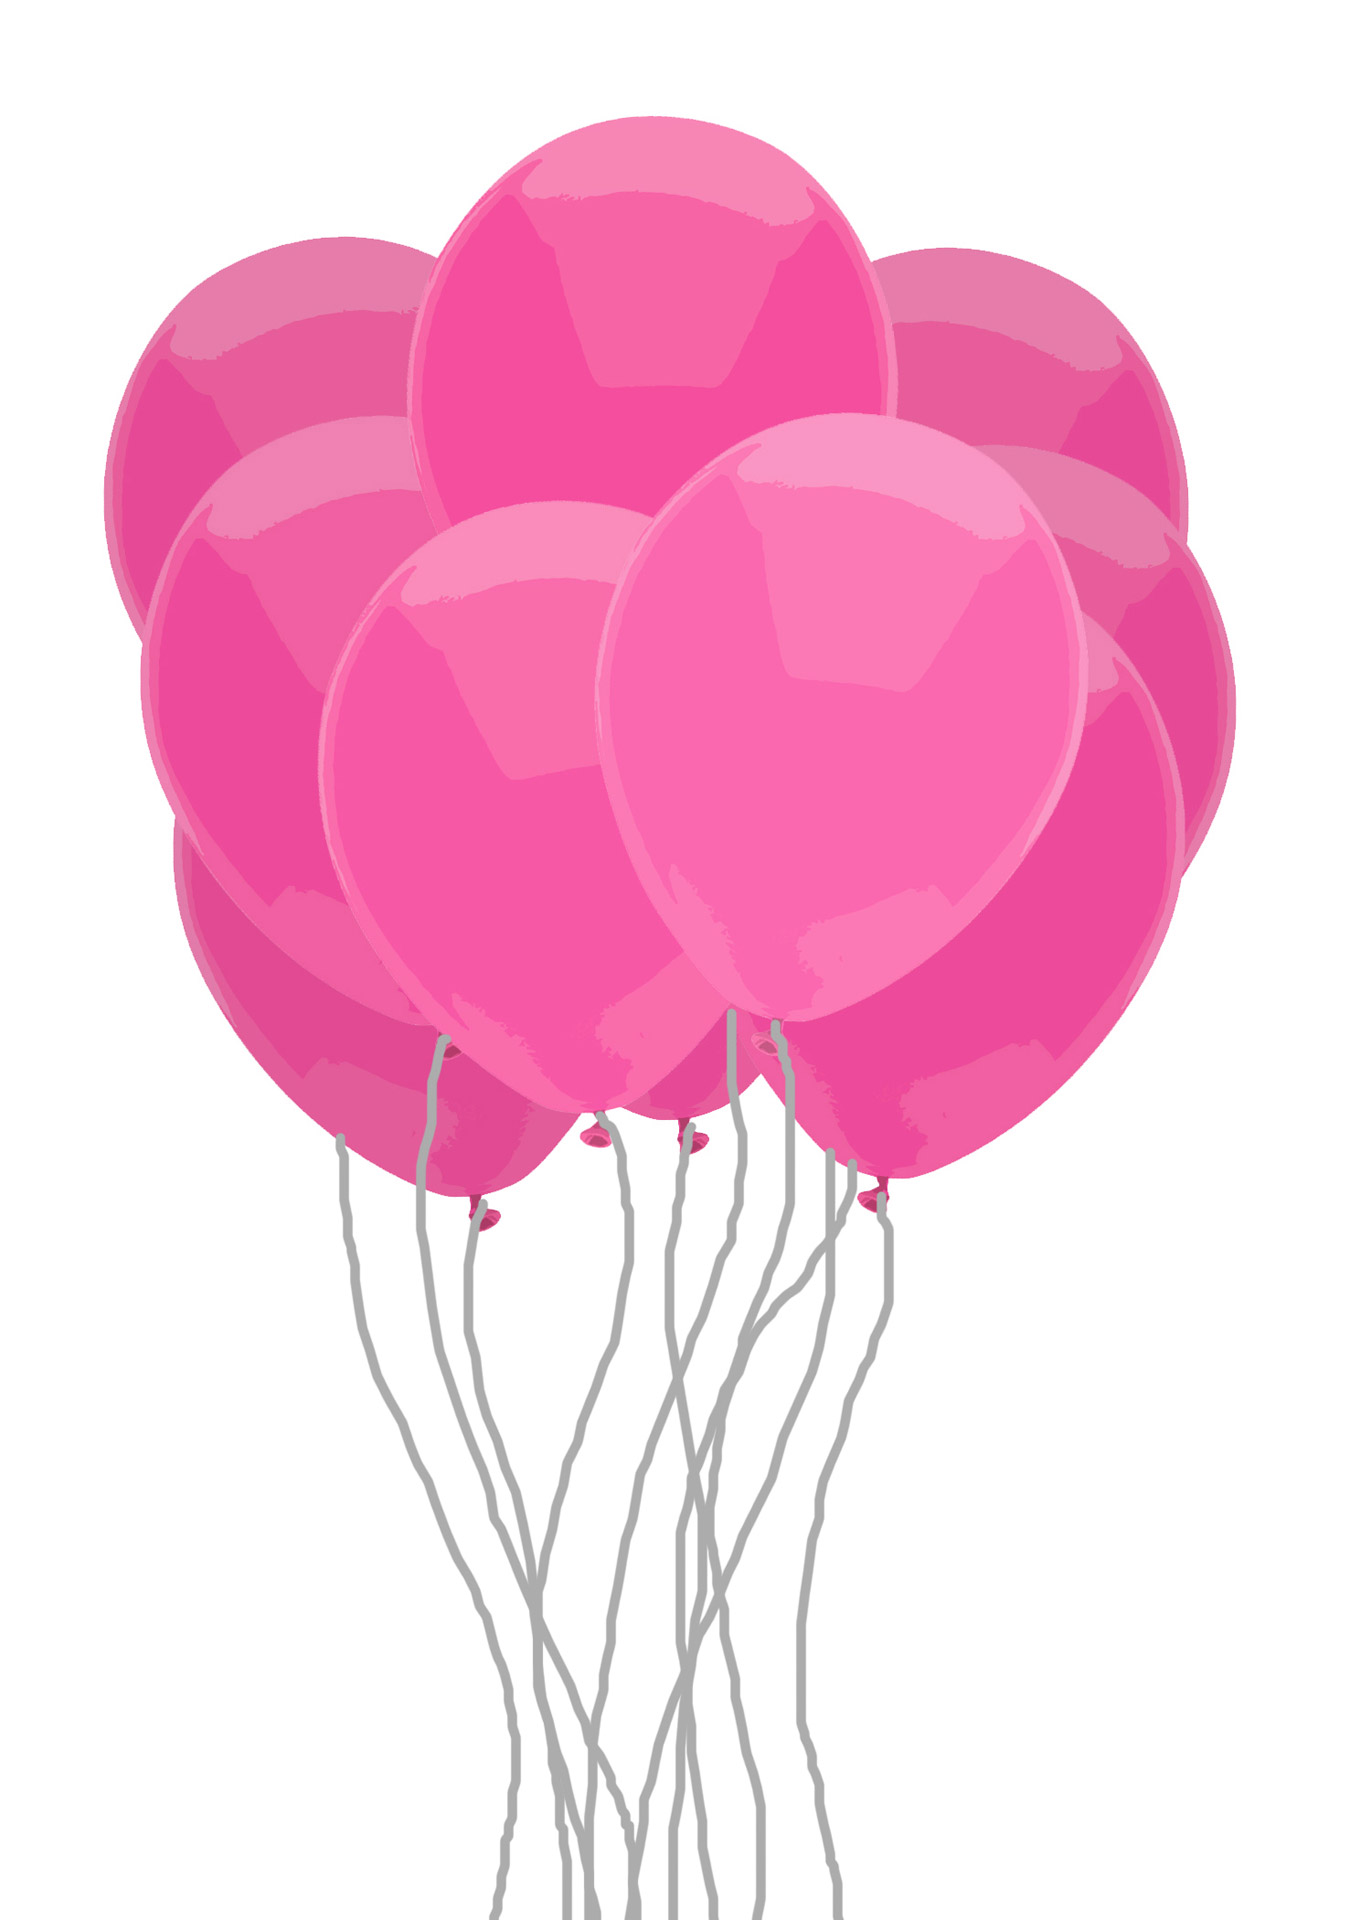 pink balloon bunch free photo